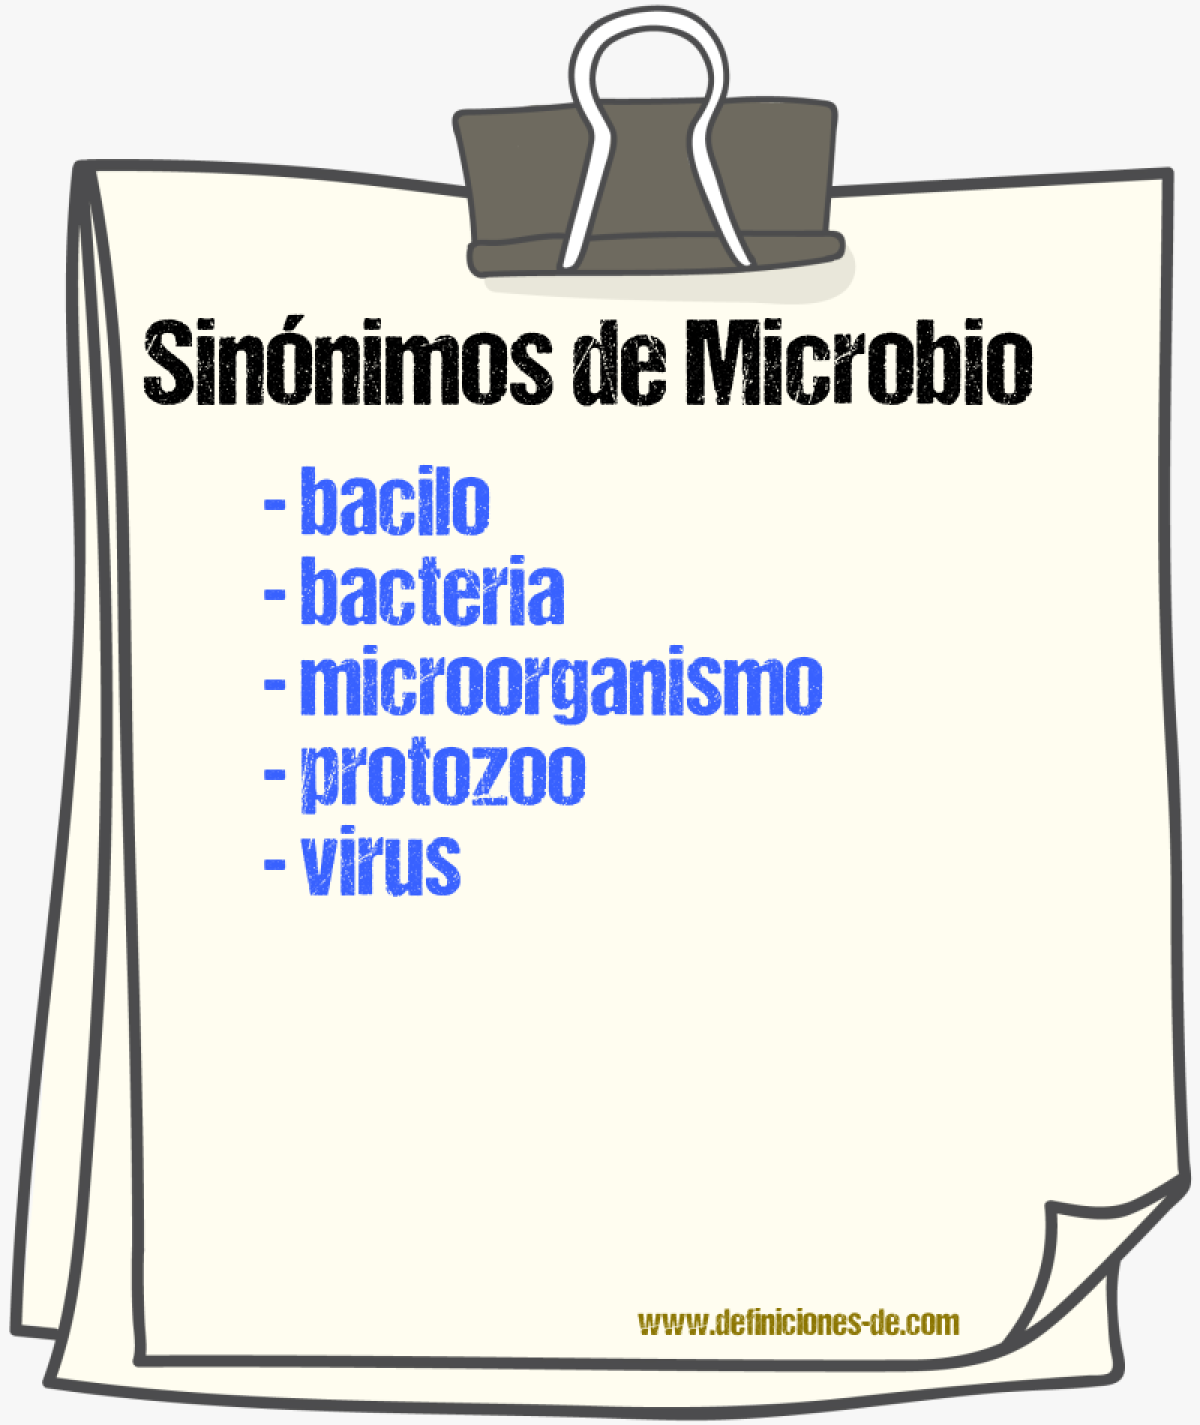 Sinnimos de microbio